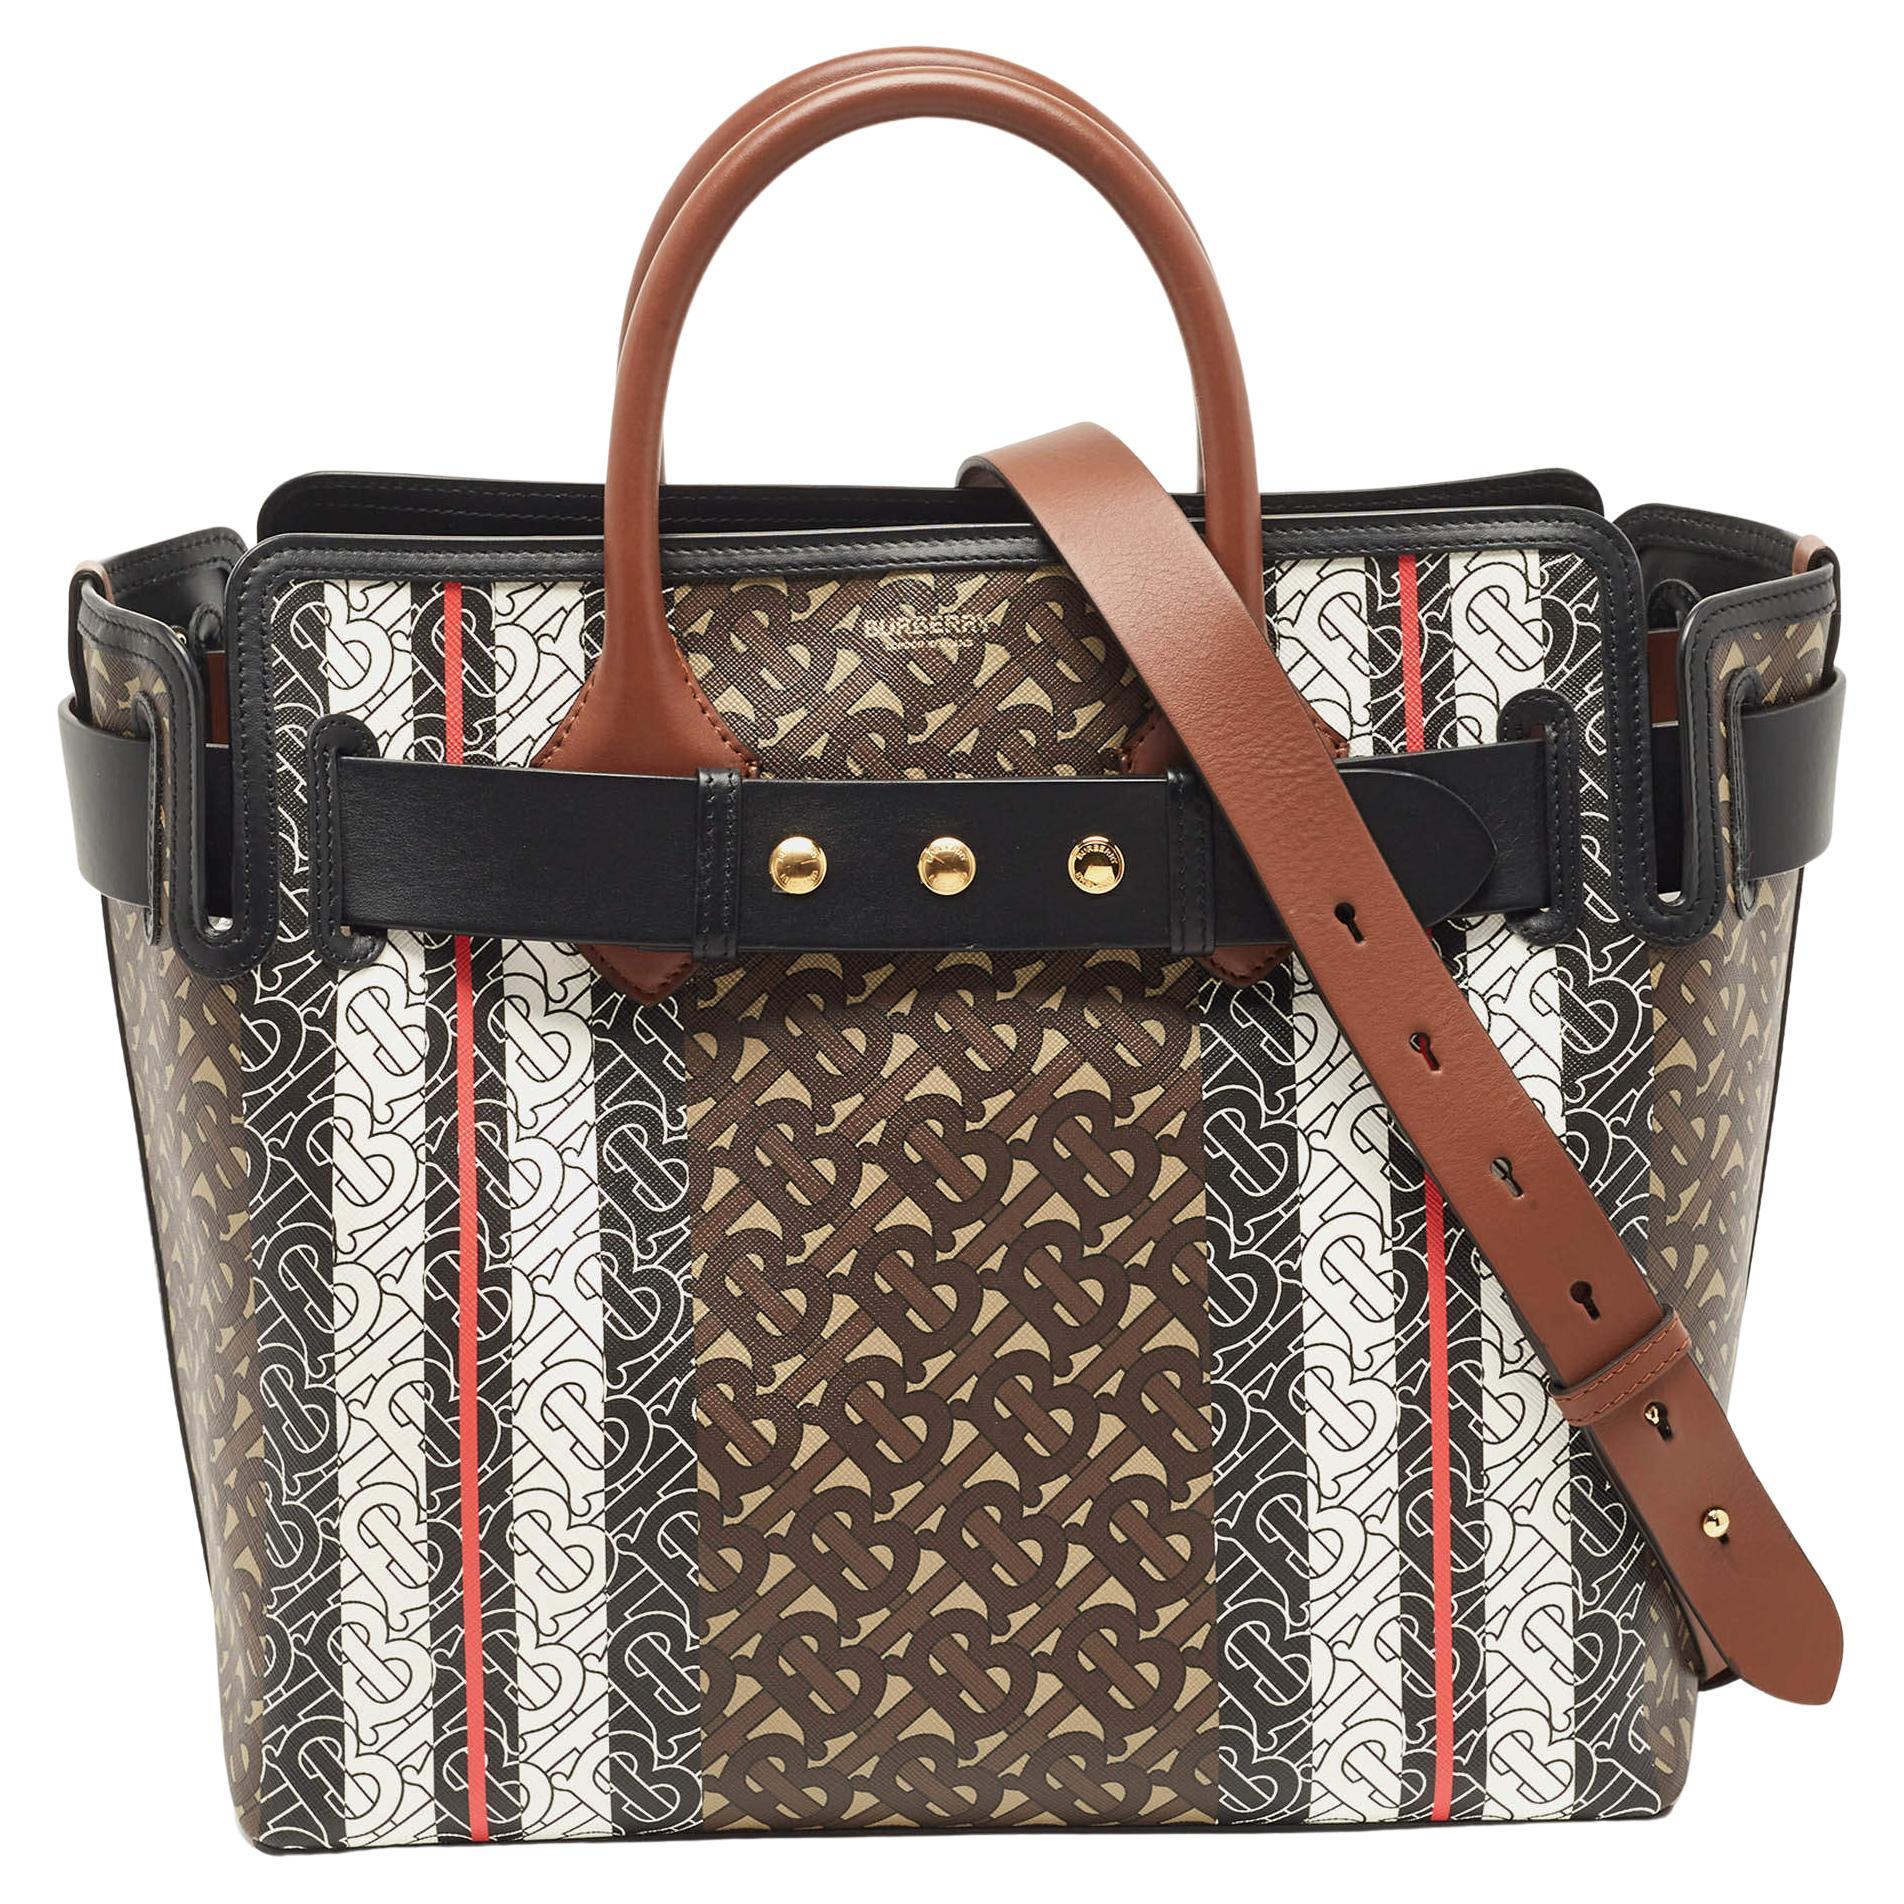 The Handbag Battlefield: Louis Vuitton, Gucci and Prada